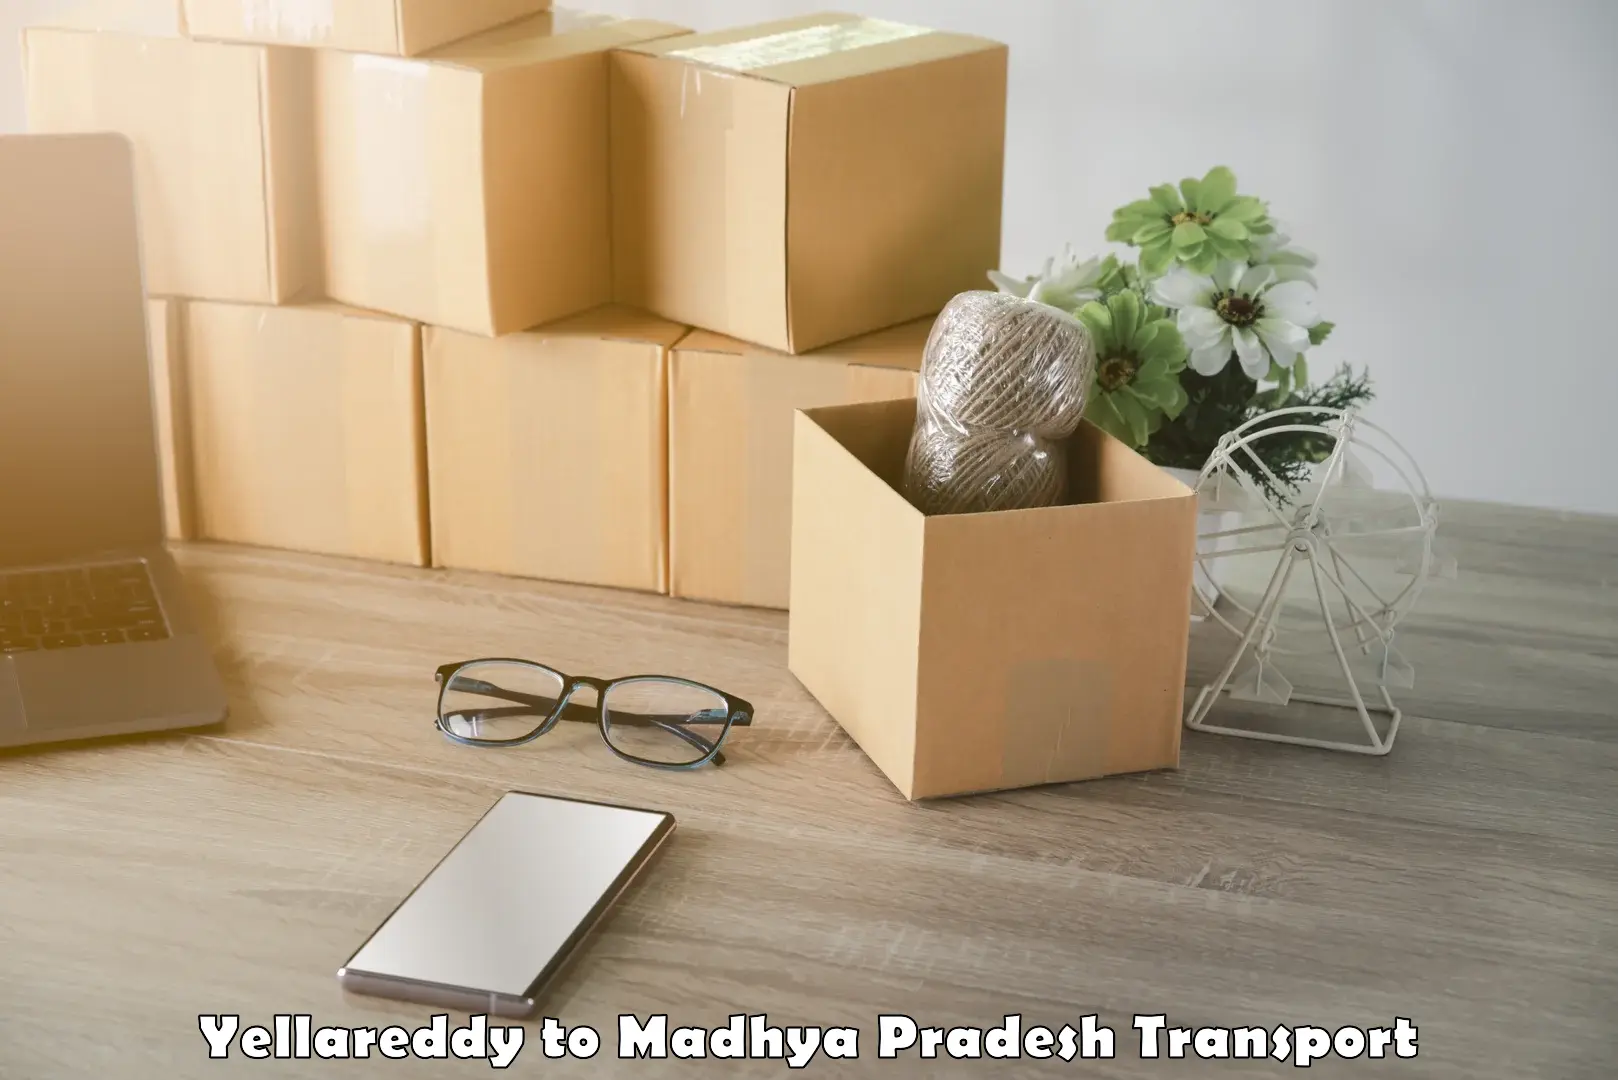 Transport in sharing Yellareddy to Chapda